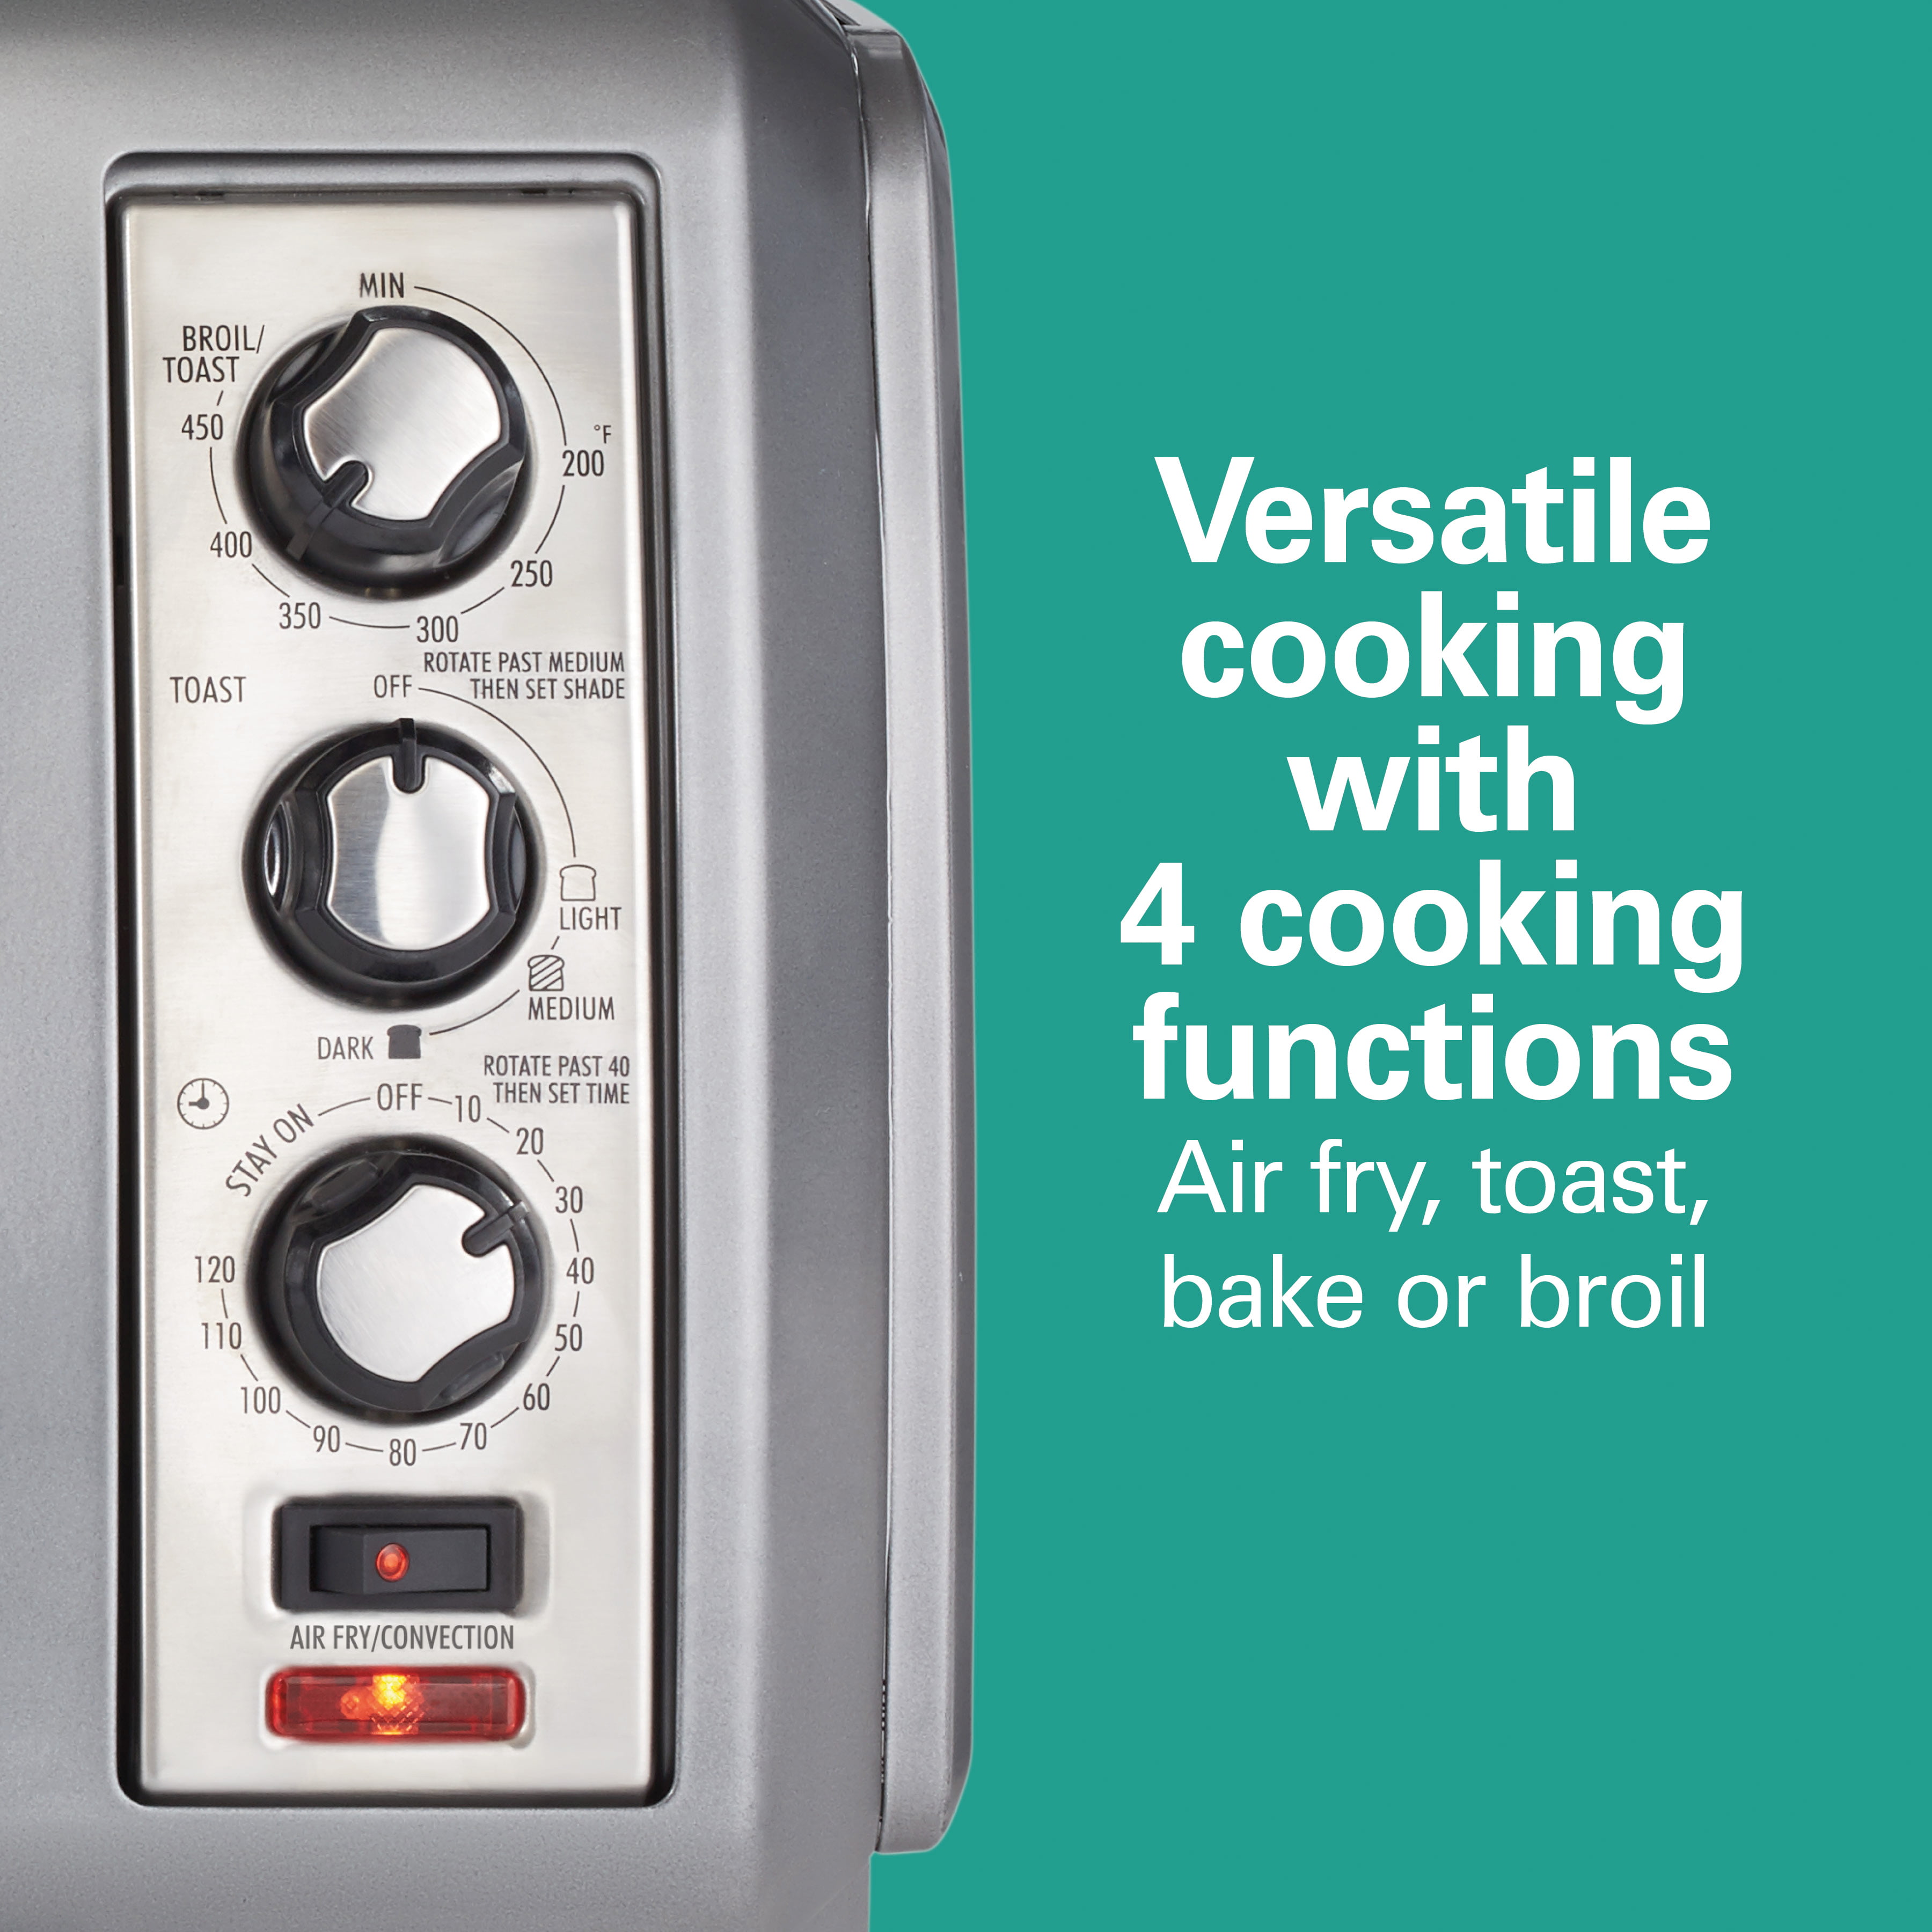 Hamilton Beach Sure-Crisp® Air Fryer Toaster Oven with Easy Reach